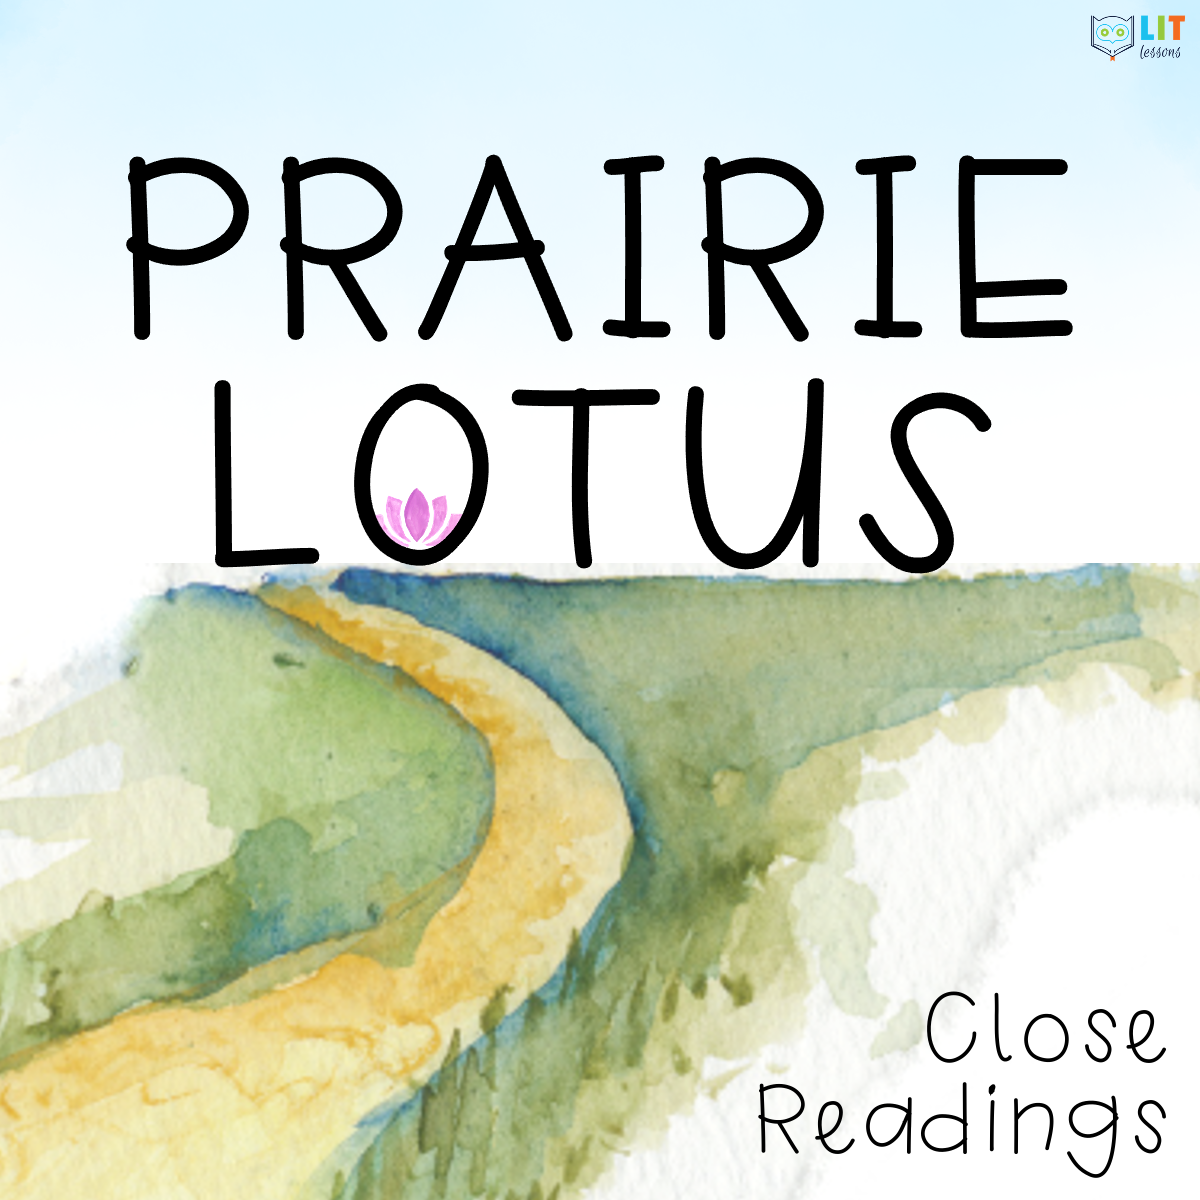 Prairie Lotus Close Readings